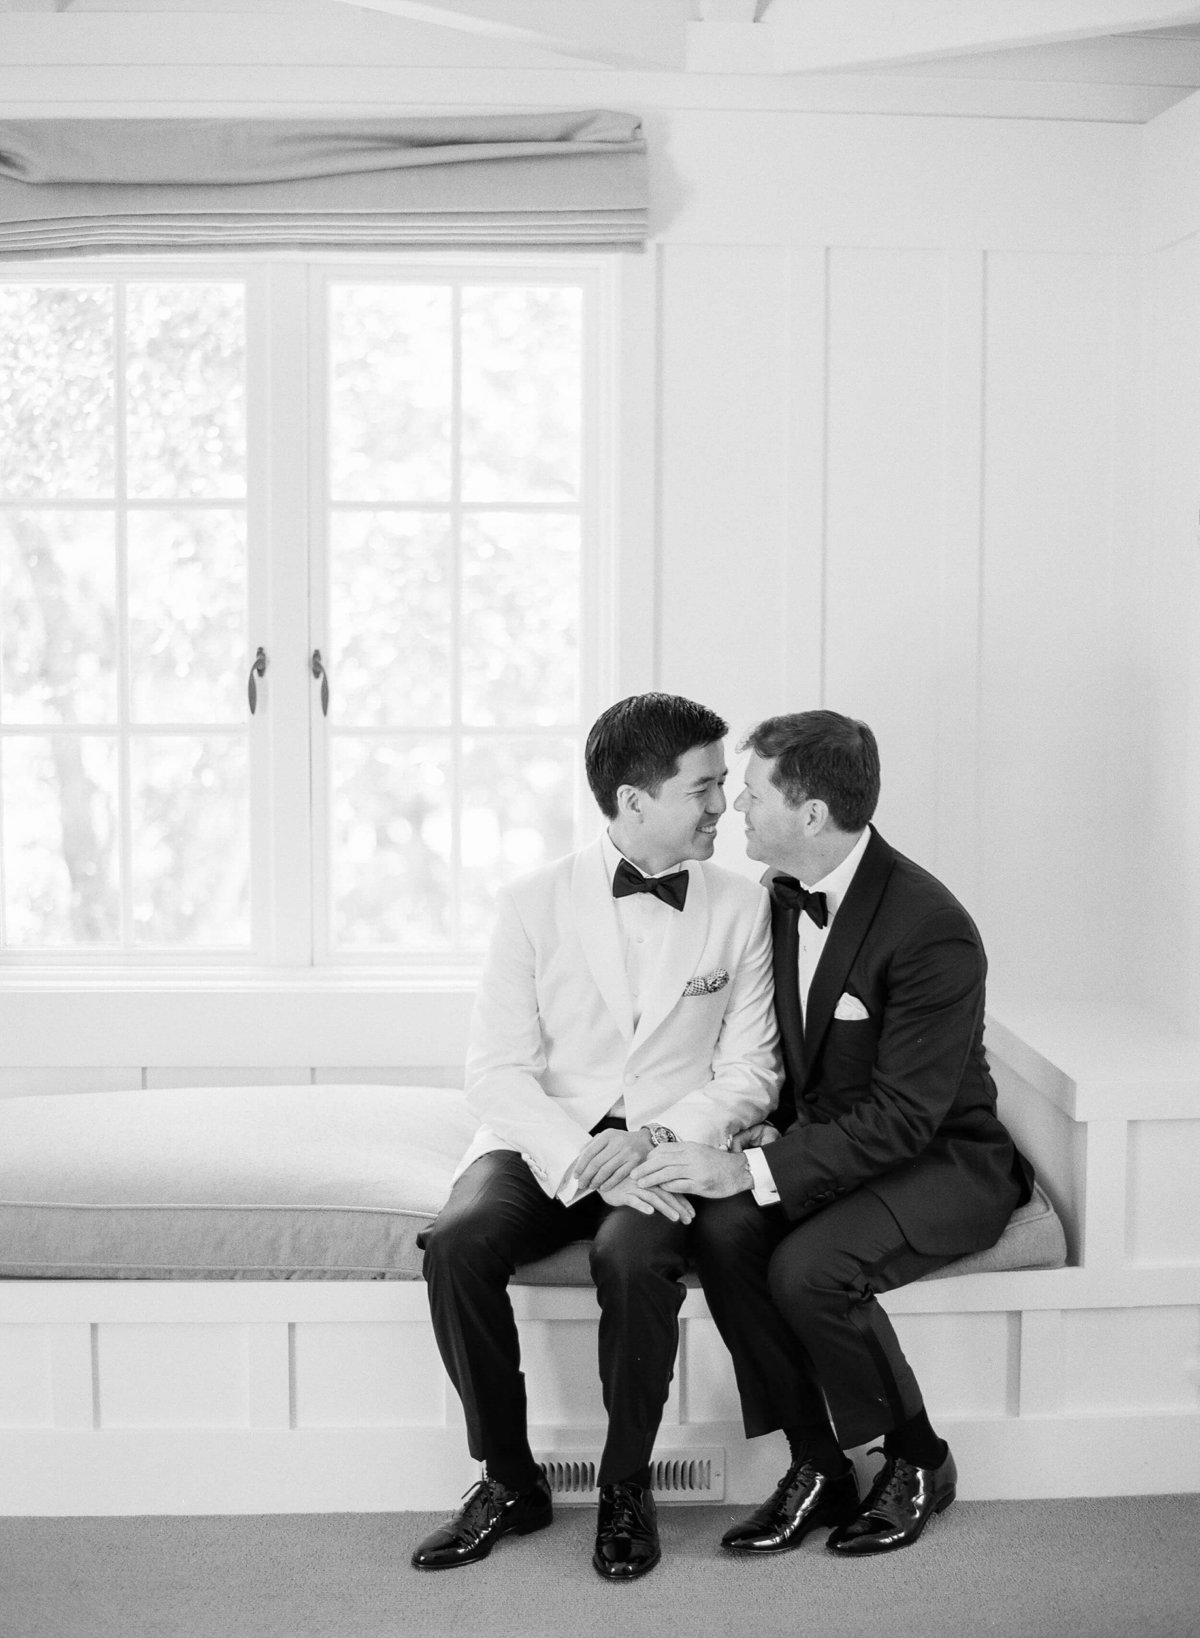 20-KTMerry-weddings-photography-samesex-portraits